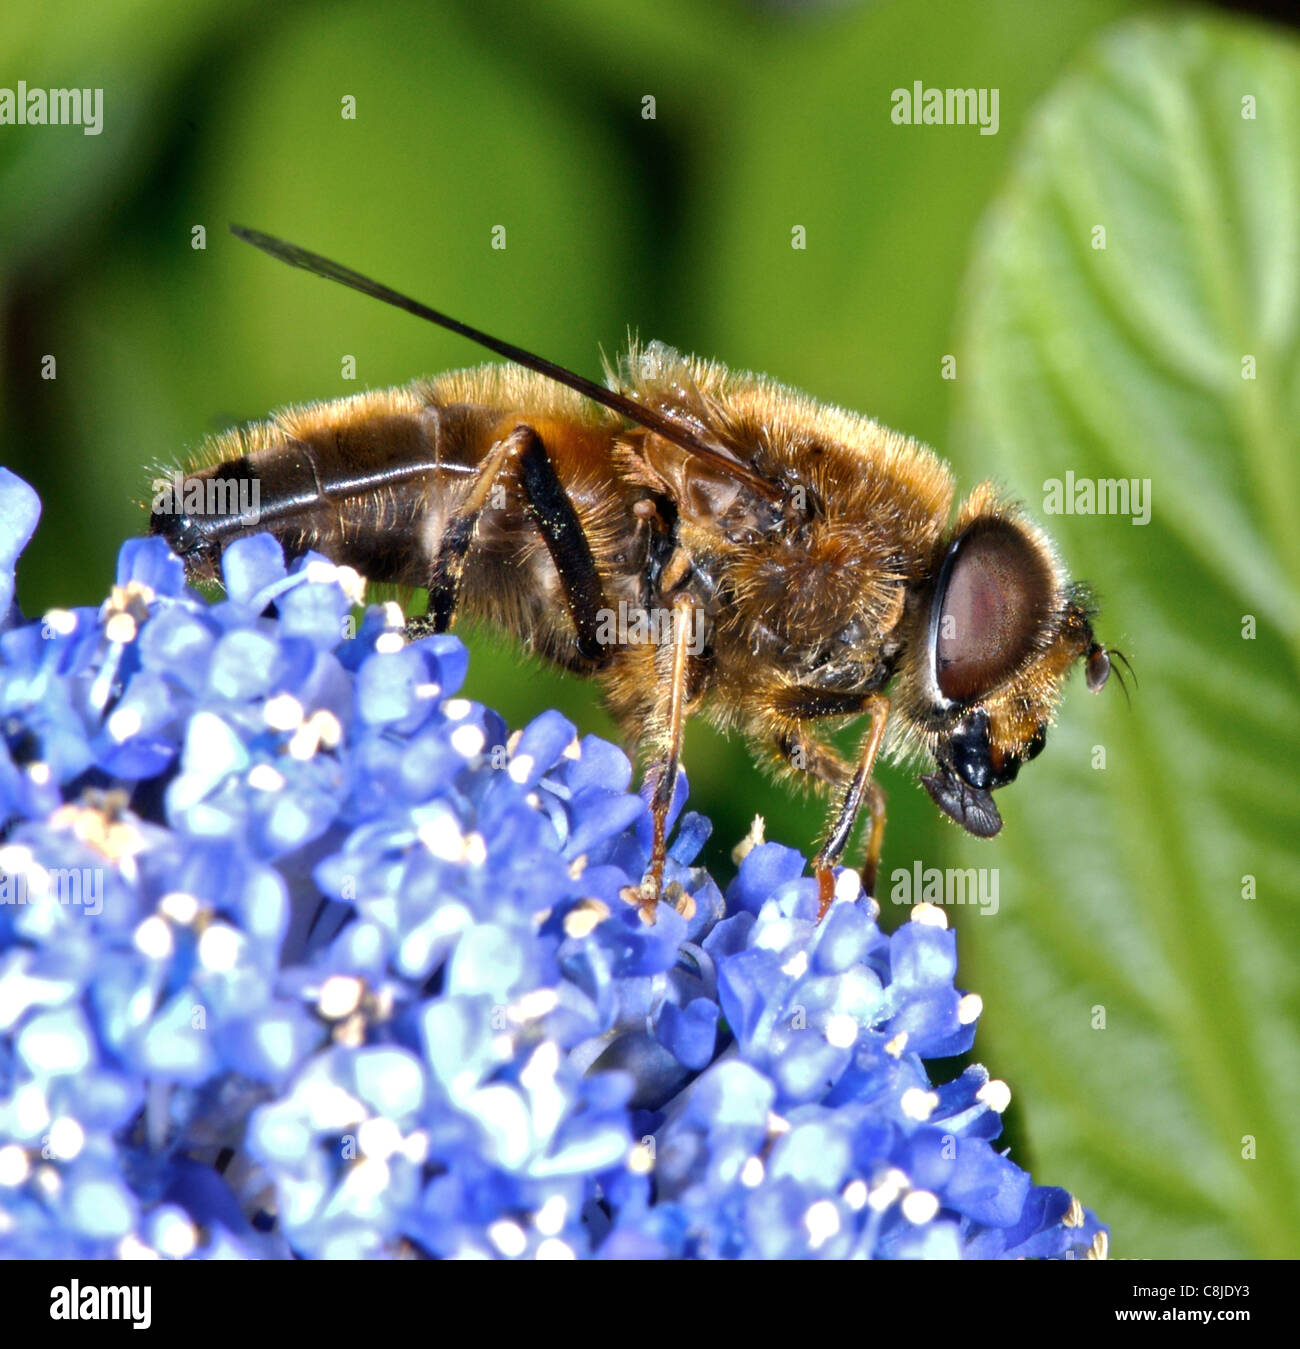 La abeja de miel de abeja (que recolectan néctar y polen) en el REINO UNIDO Foto de stock